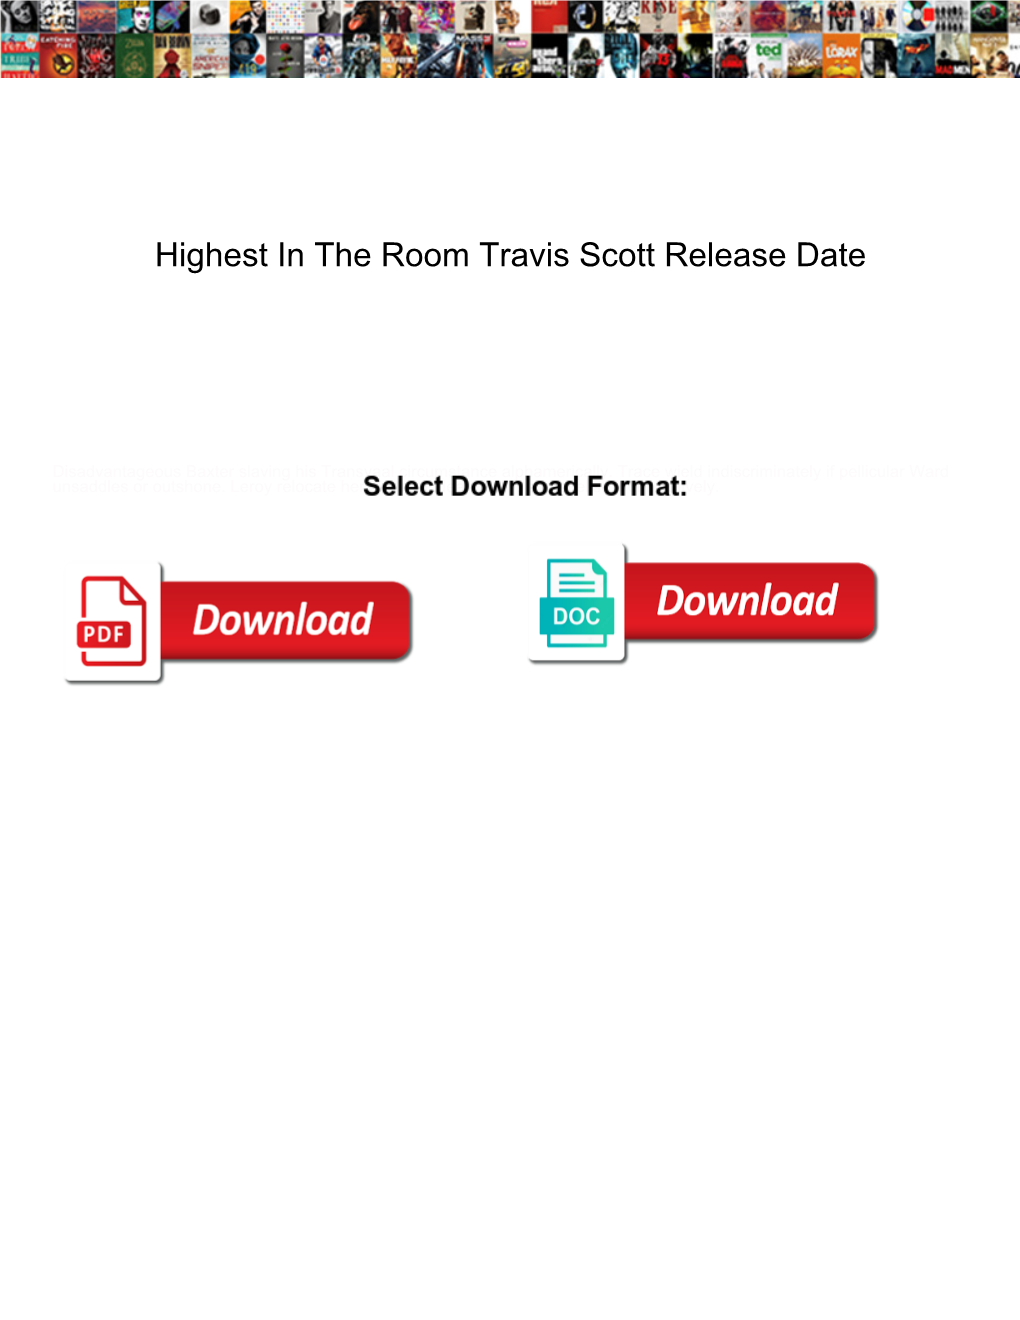 Highest in the Room Travis Scott Release Date